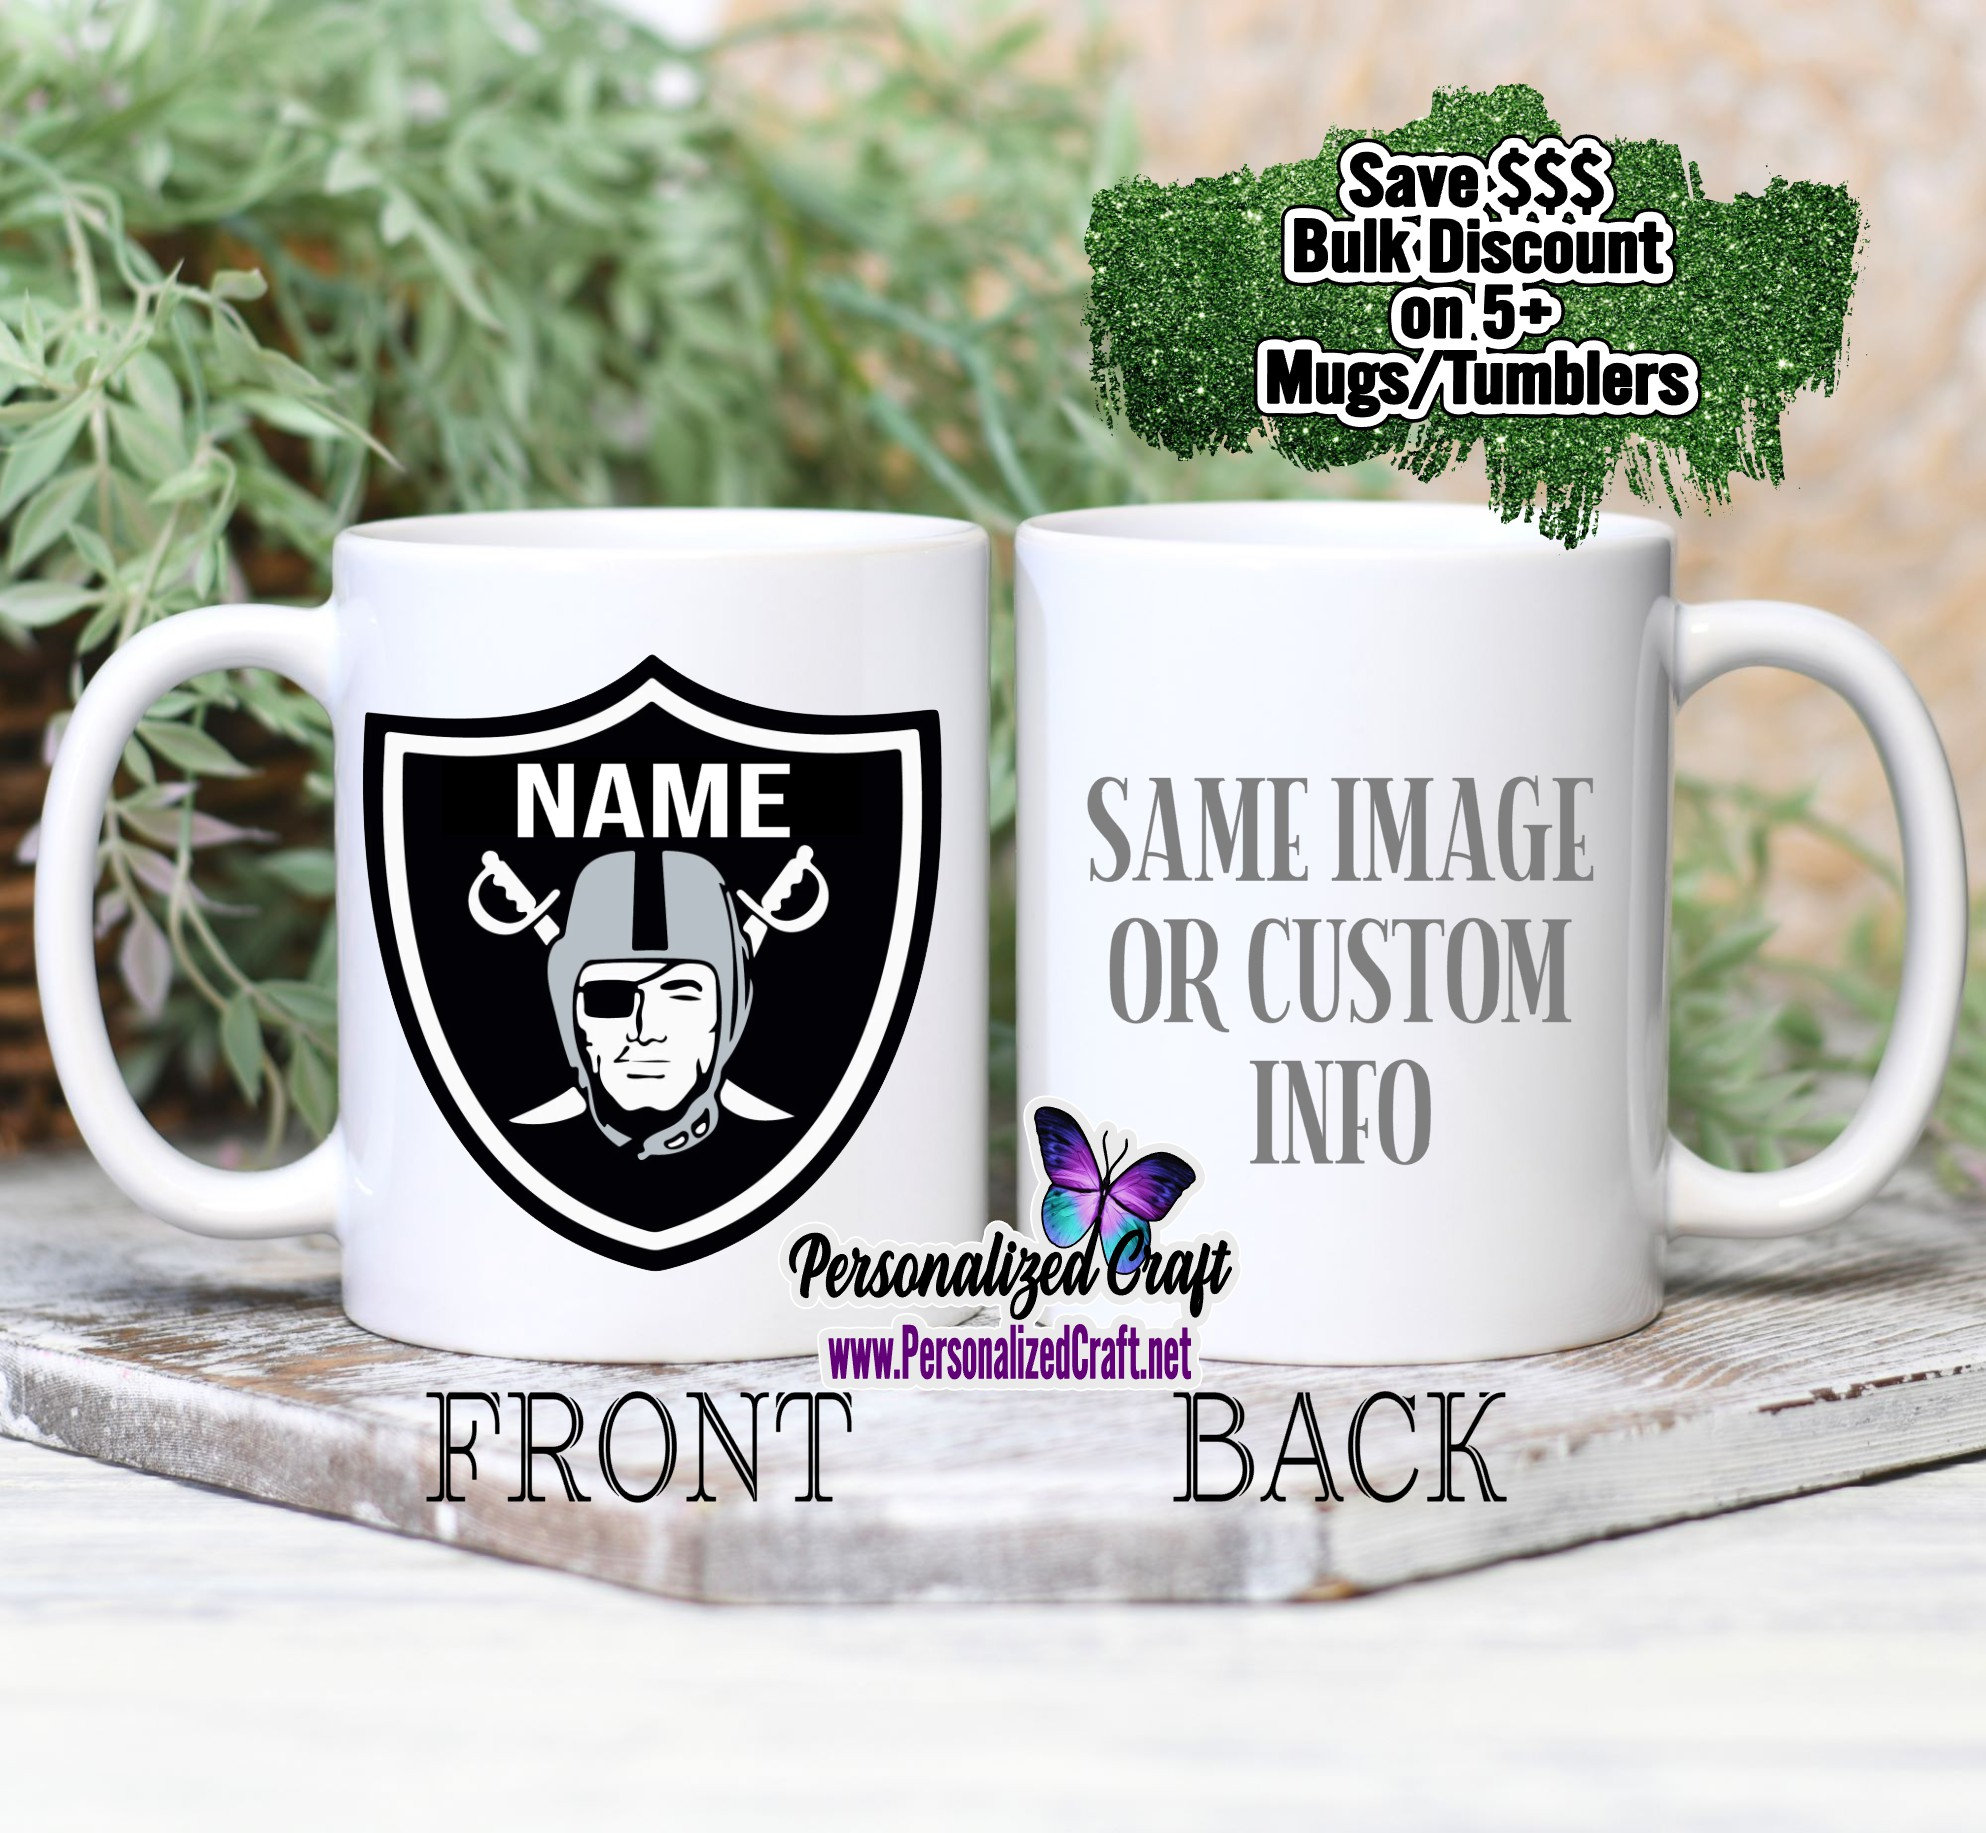  Rico Industries NFL Football Las Vegas Raiders Black  Personalized 16 oz Team Color Laser Engraved Speckled Ceramic Coffee Mug :  Sports & Outdoors